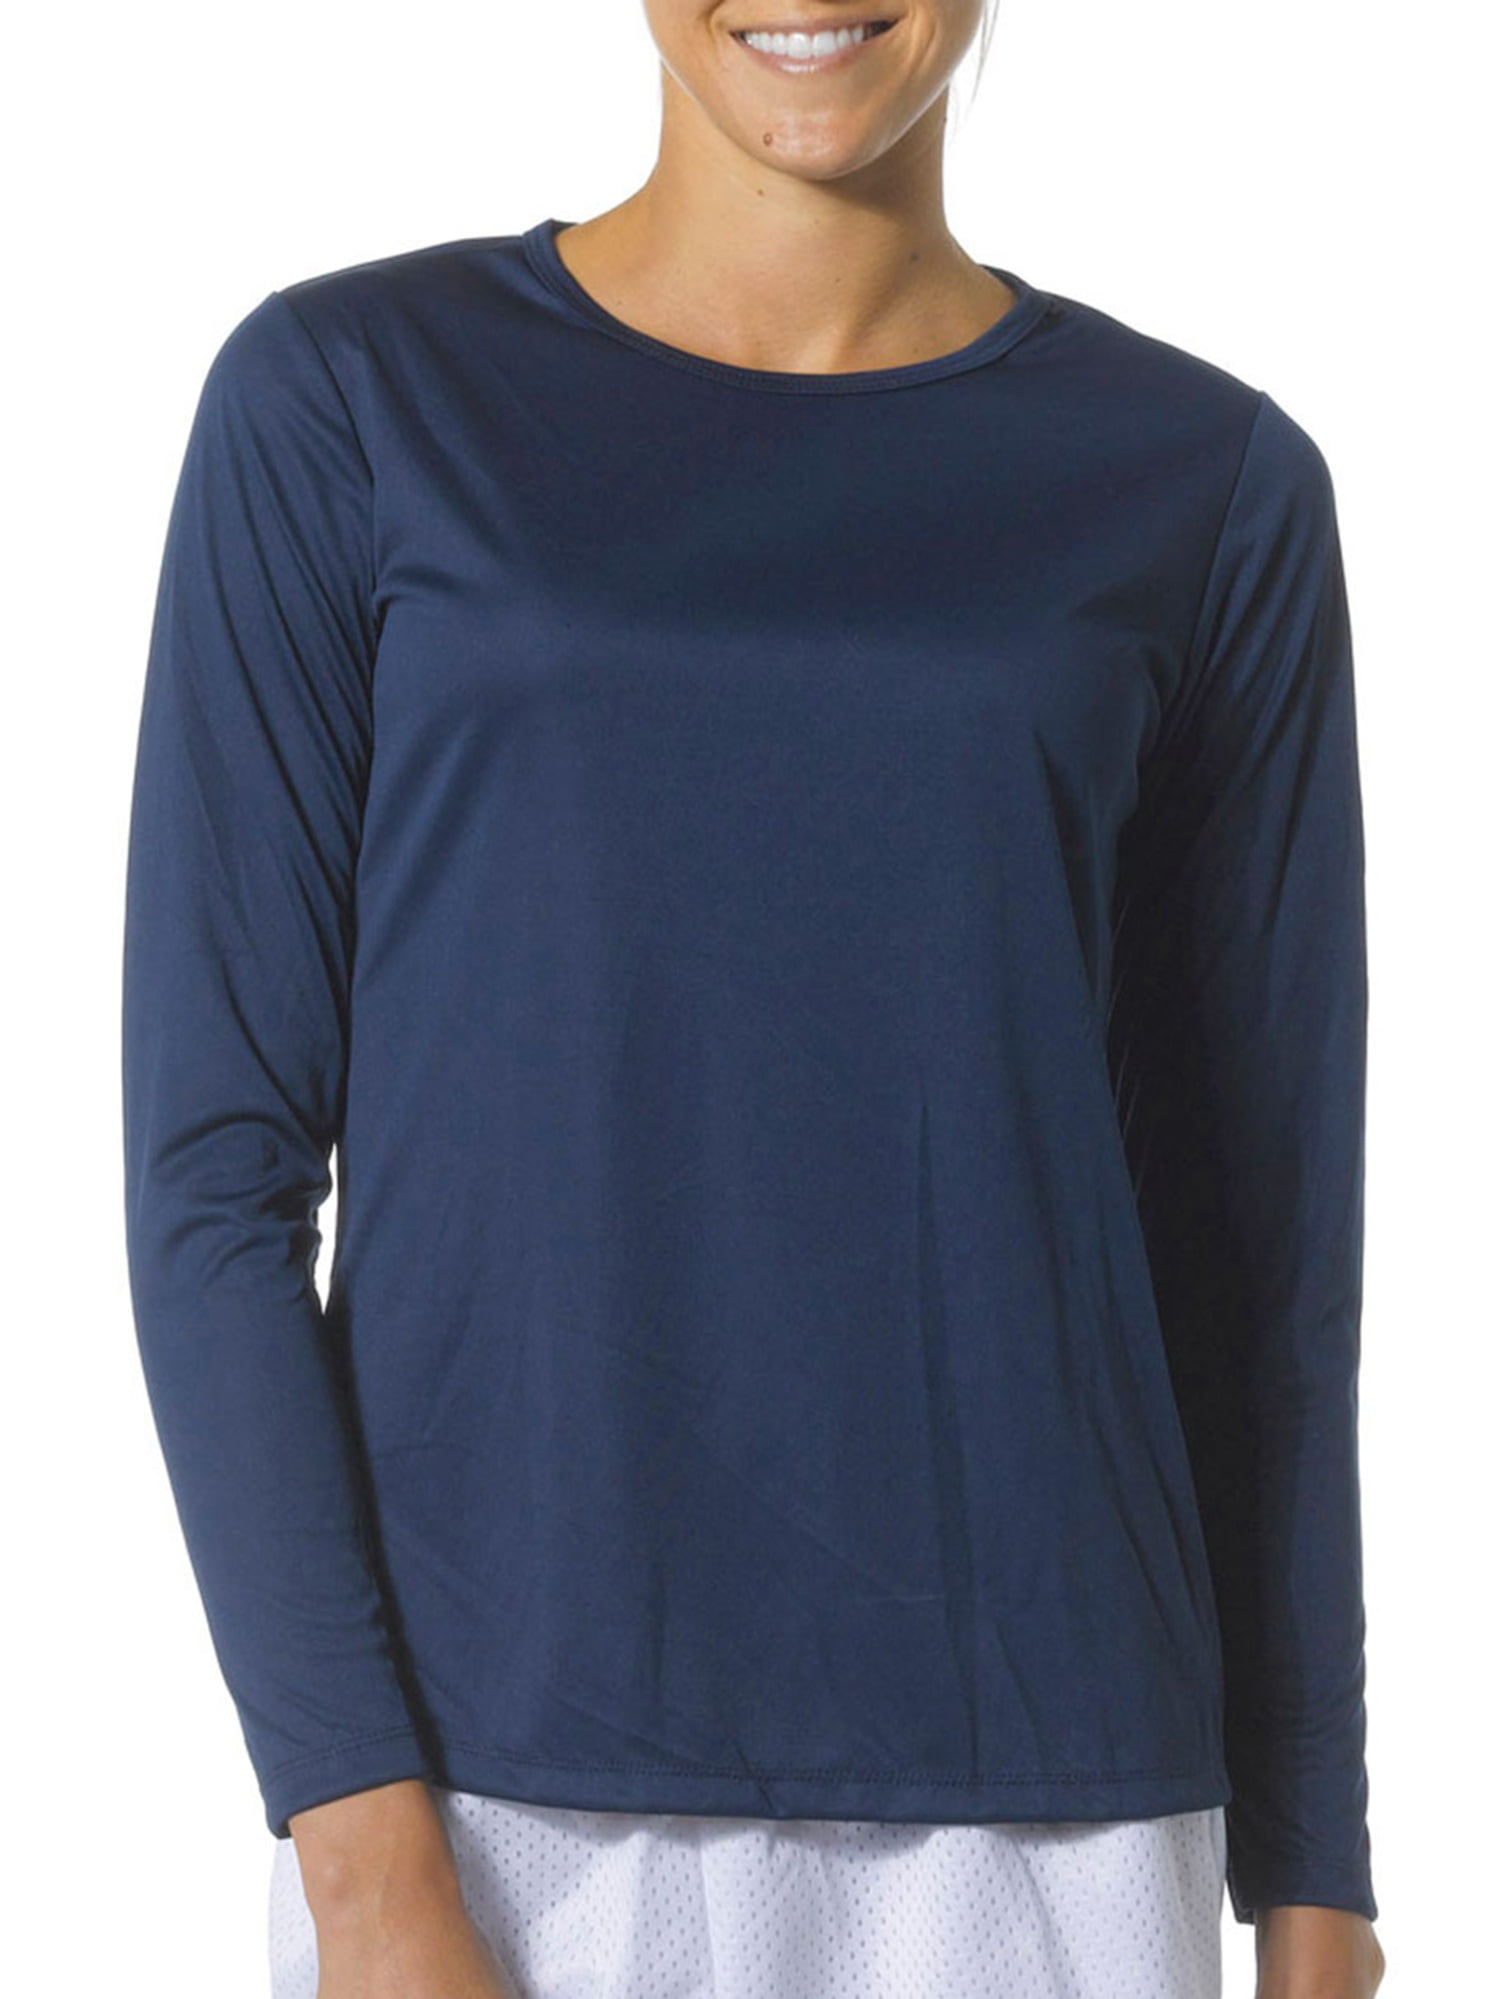 Women's Cooling Resistant T-Shirt - Walmart.com